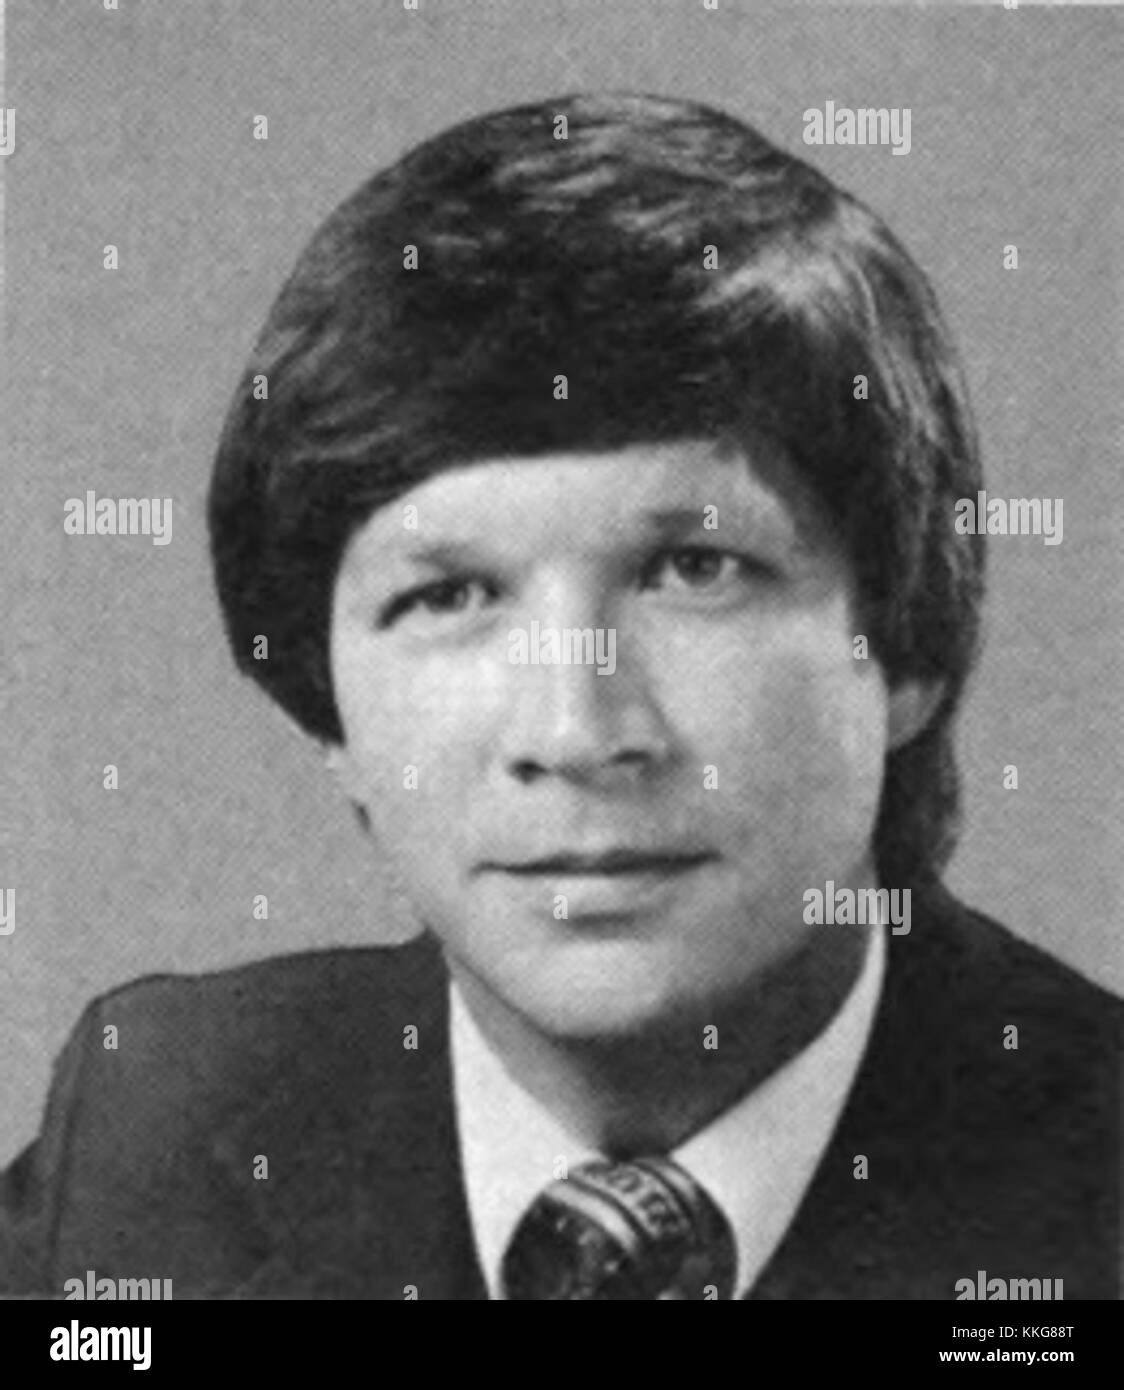 John Kasich 99th Congress 1985 Stock Photo